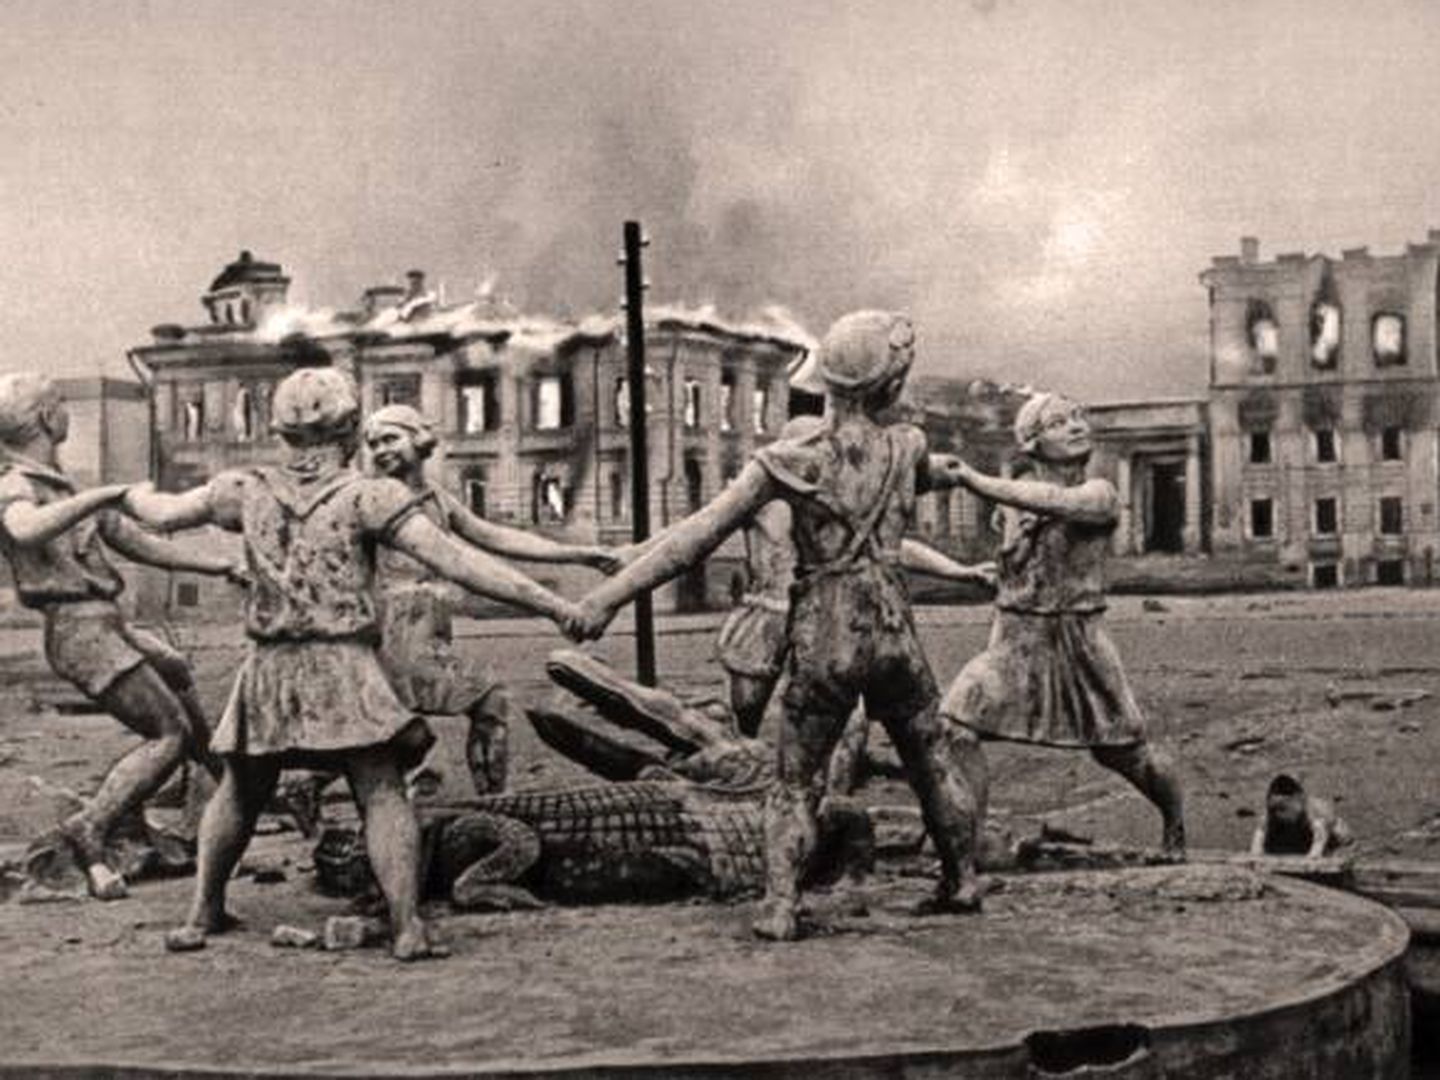 Batalla de Stalingrado.